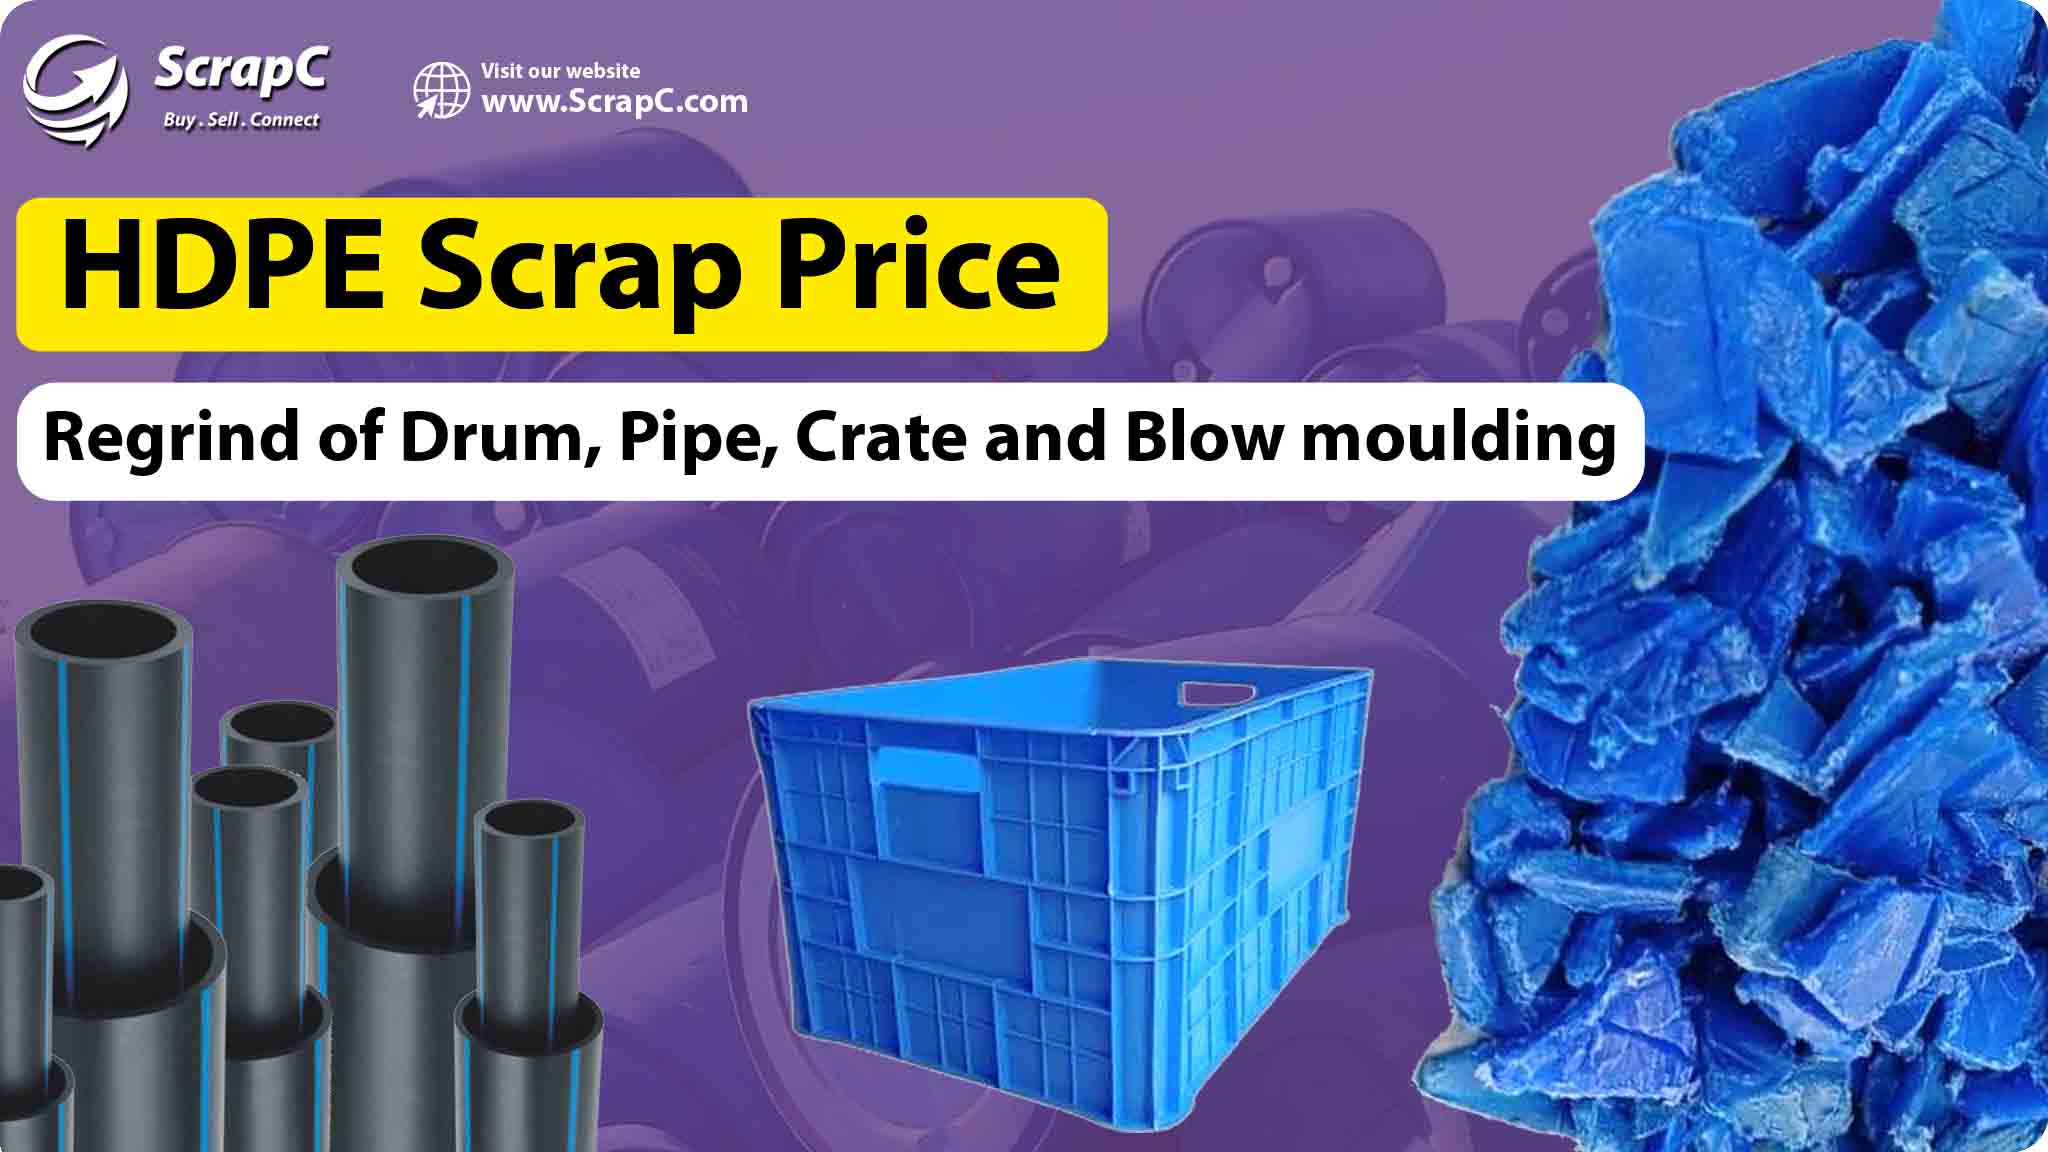 HDPE Scrap Price